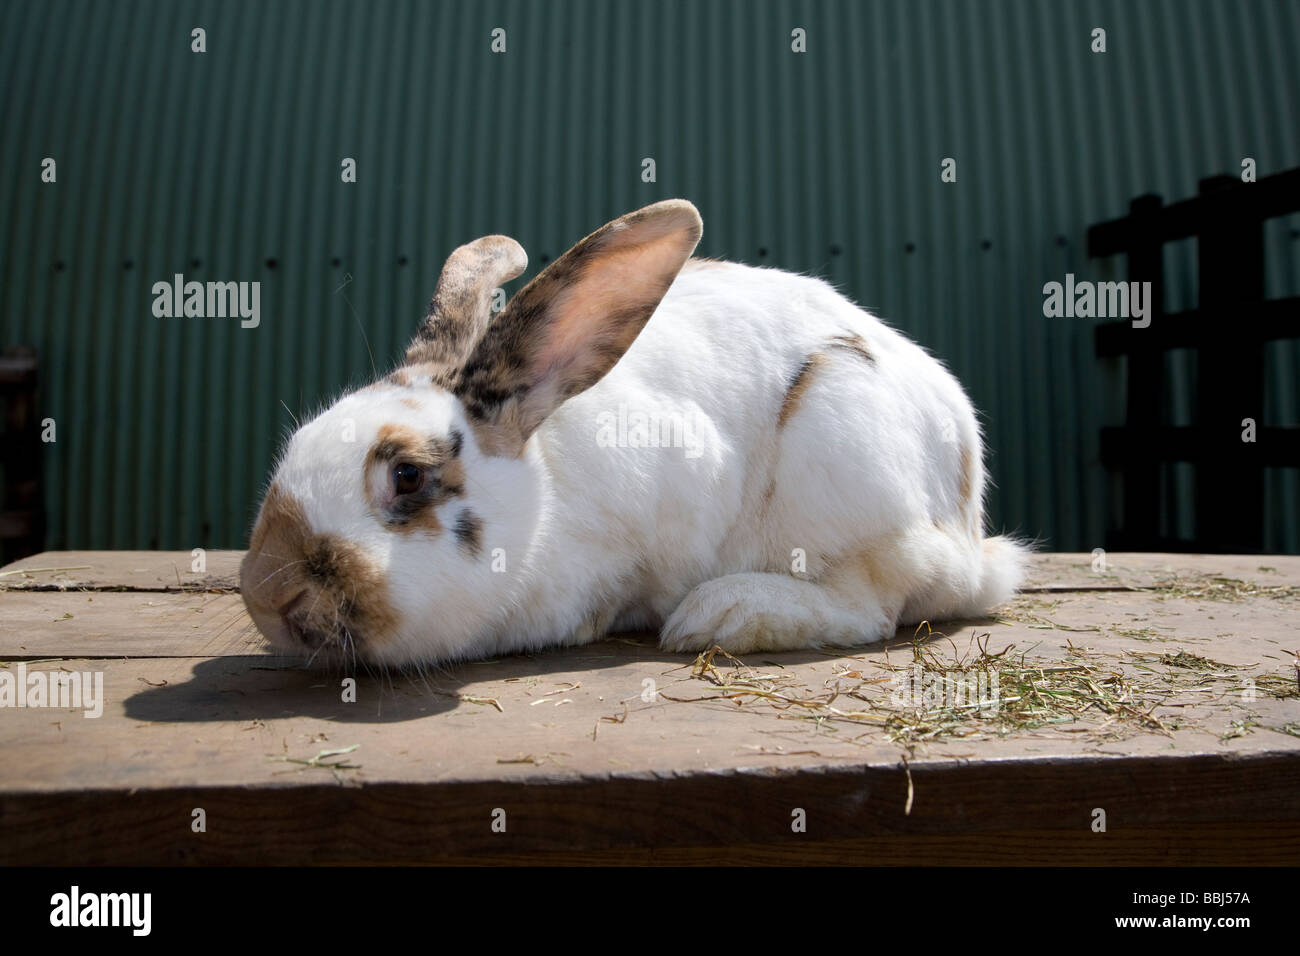 english giant rabbit